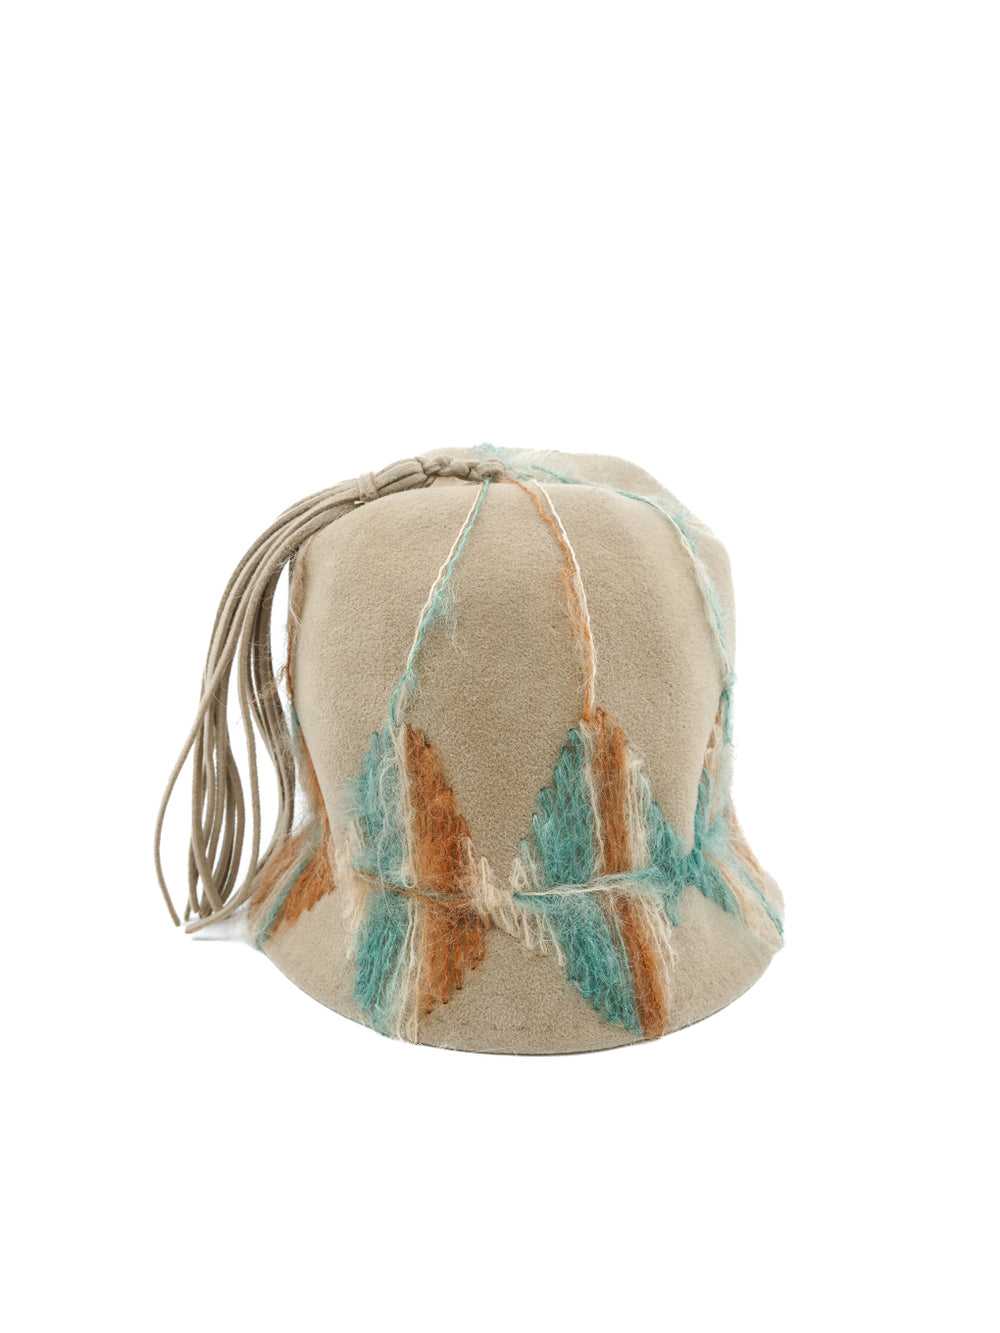 Schiaparelli Argyle Embroidered Hat - image 1